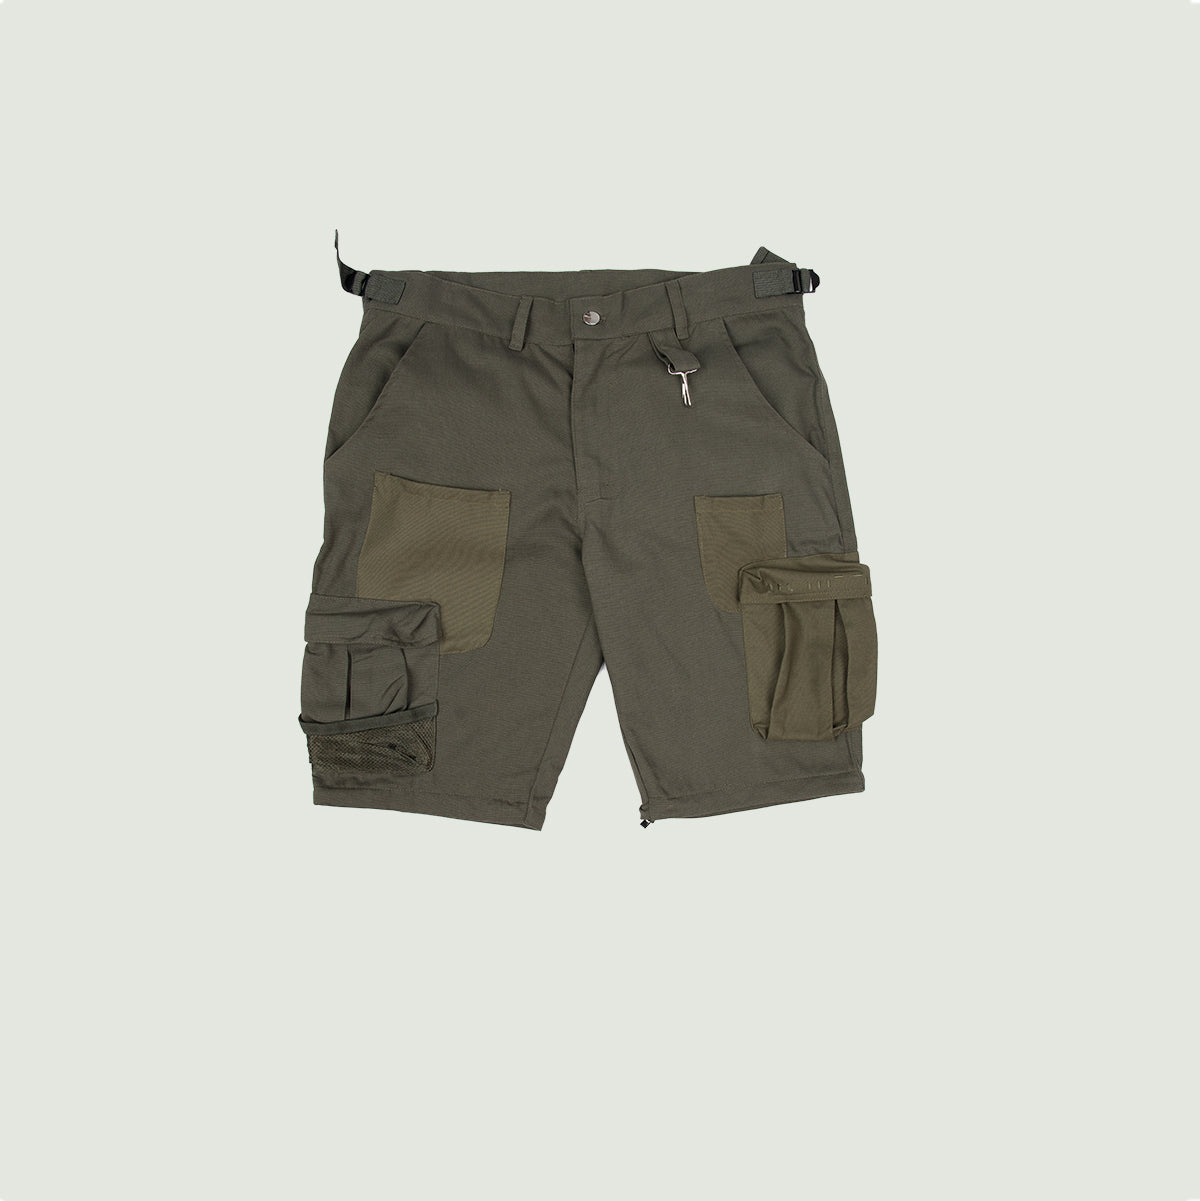 Militia Green cargo pants